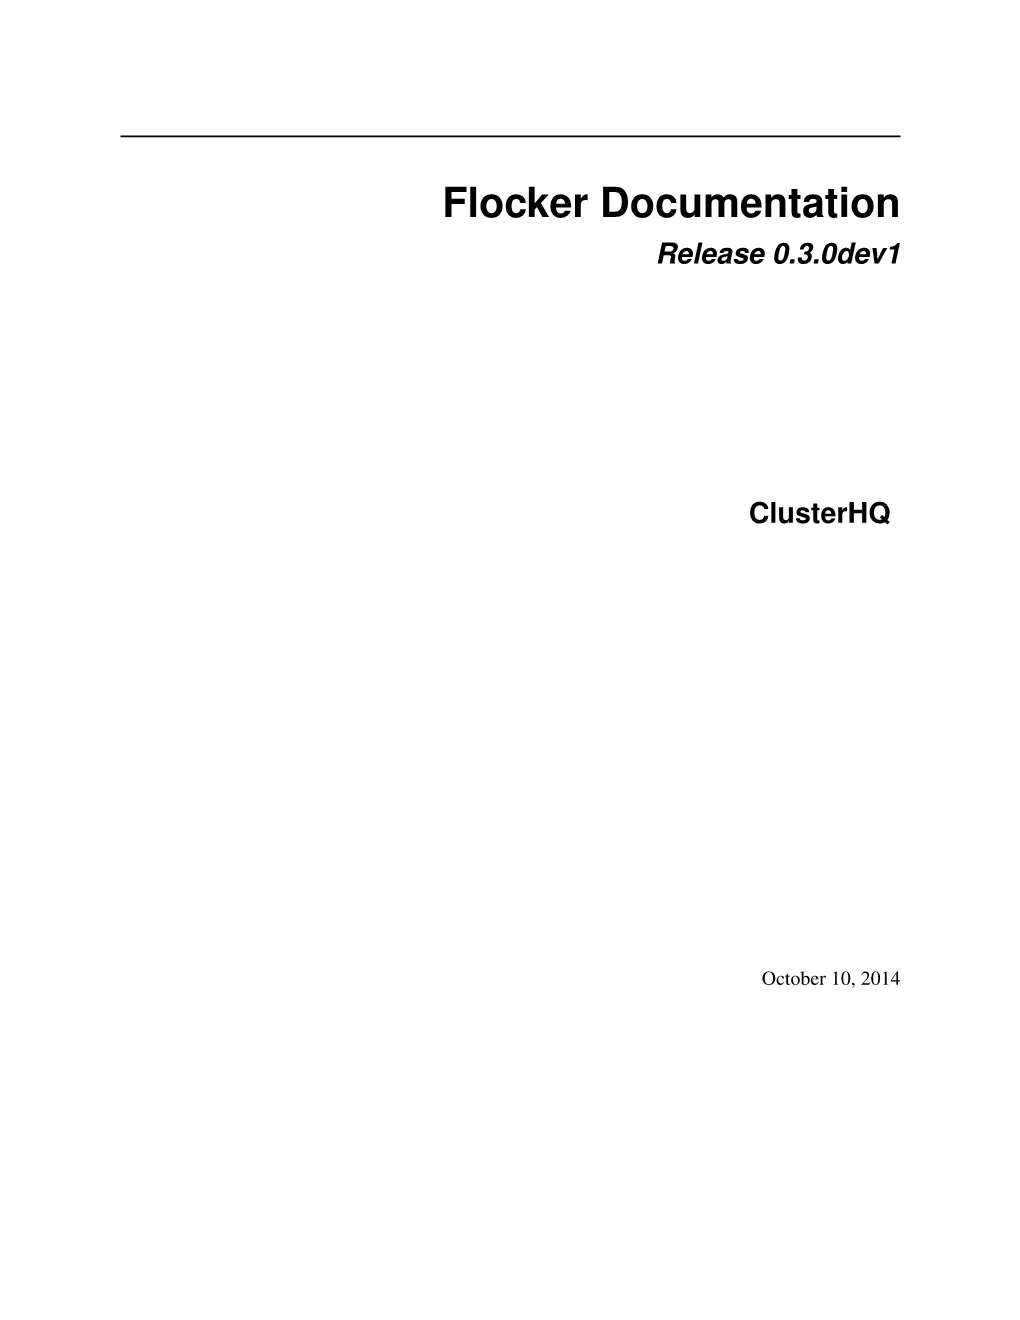 Flocker Documentation Release 0.3.0Dev1